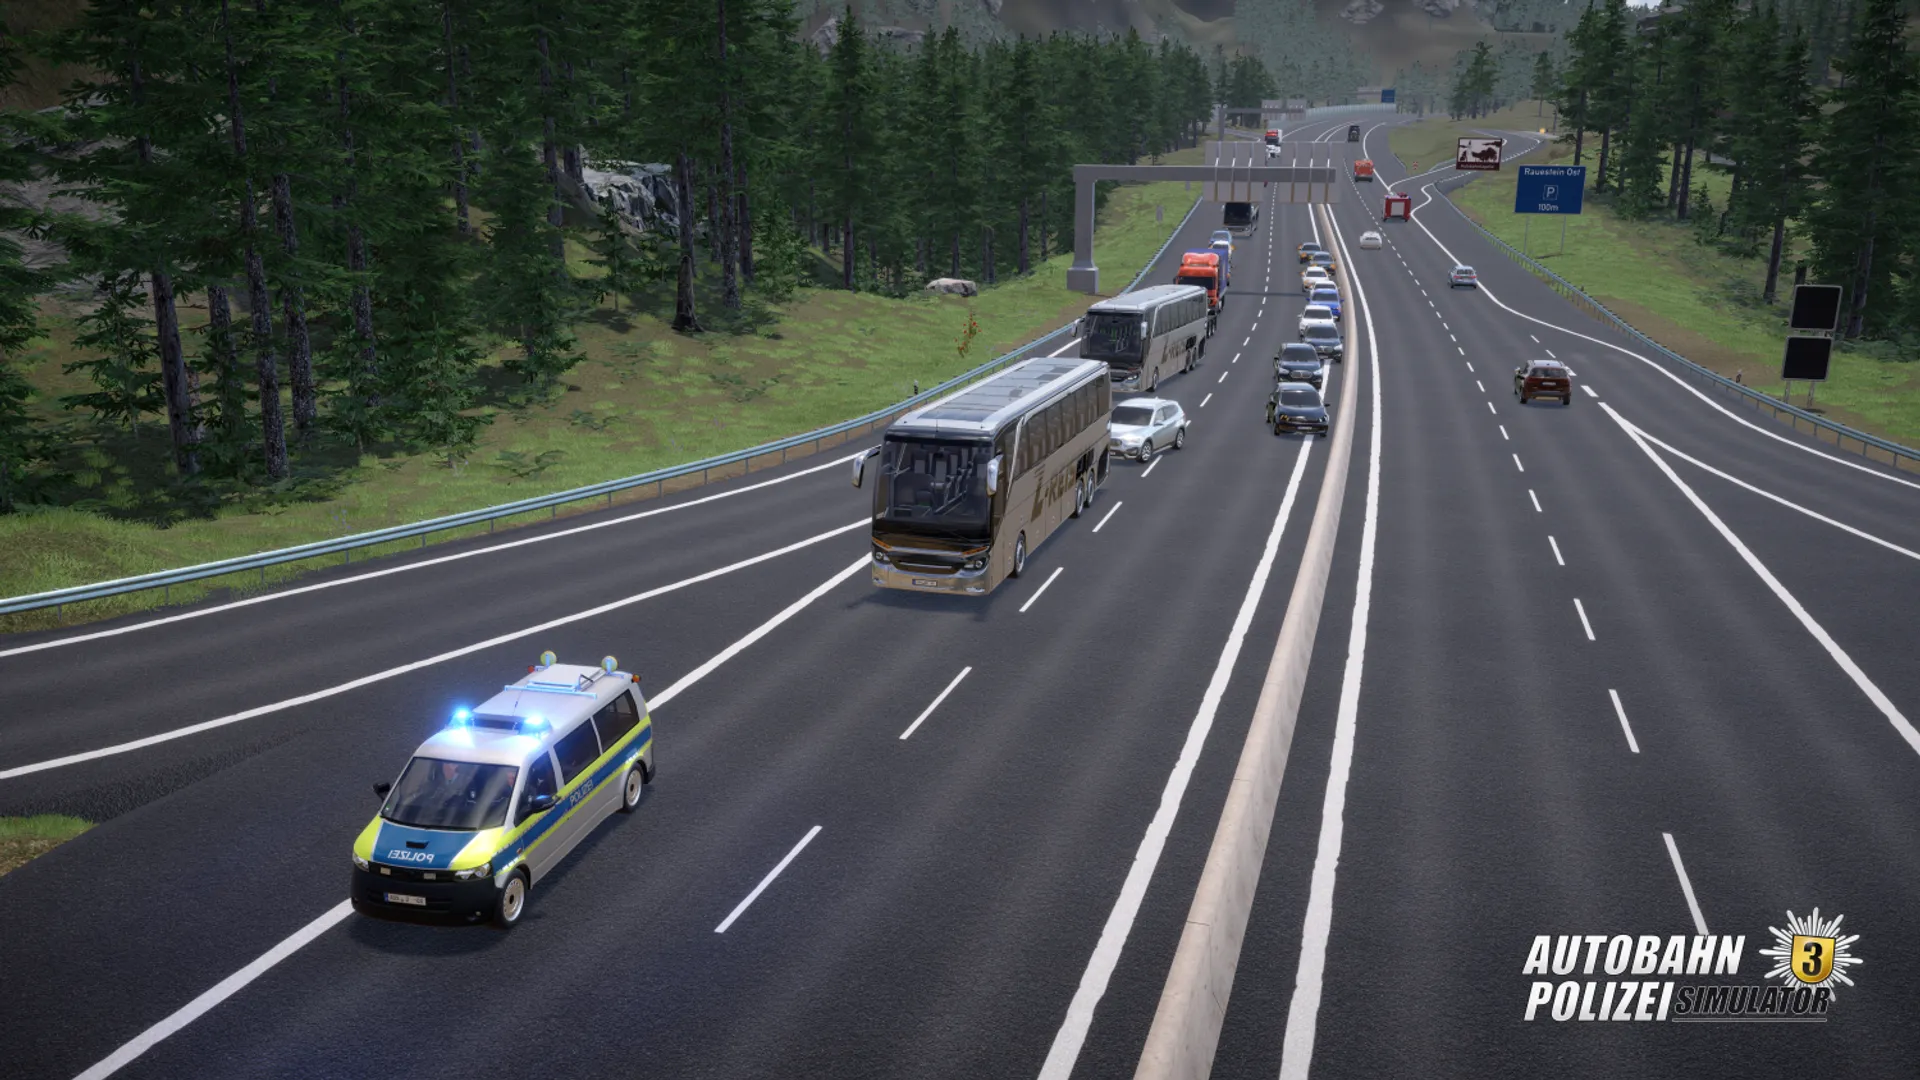 PS4 Autobahn police simulator 3 - 2